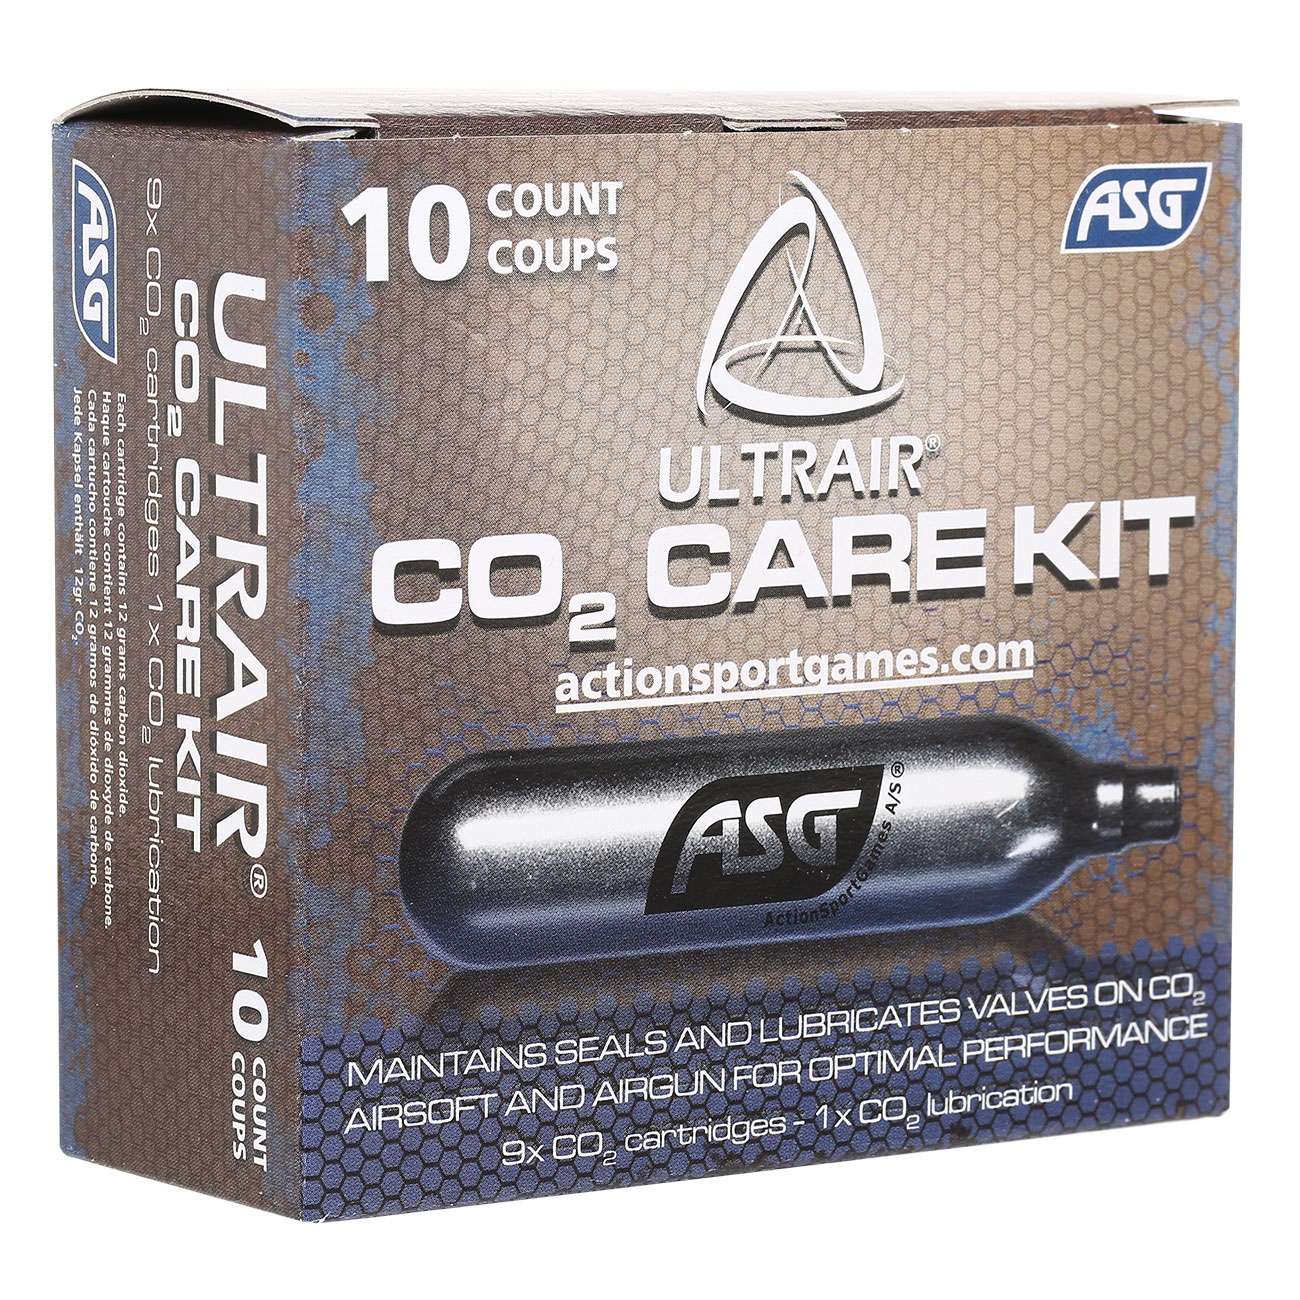 ASG Ultrair CO2 Care Kit - 9x CO2 Kapseln / 1x Wartungskapsel je 12g Bild 1